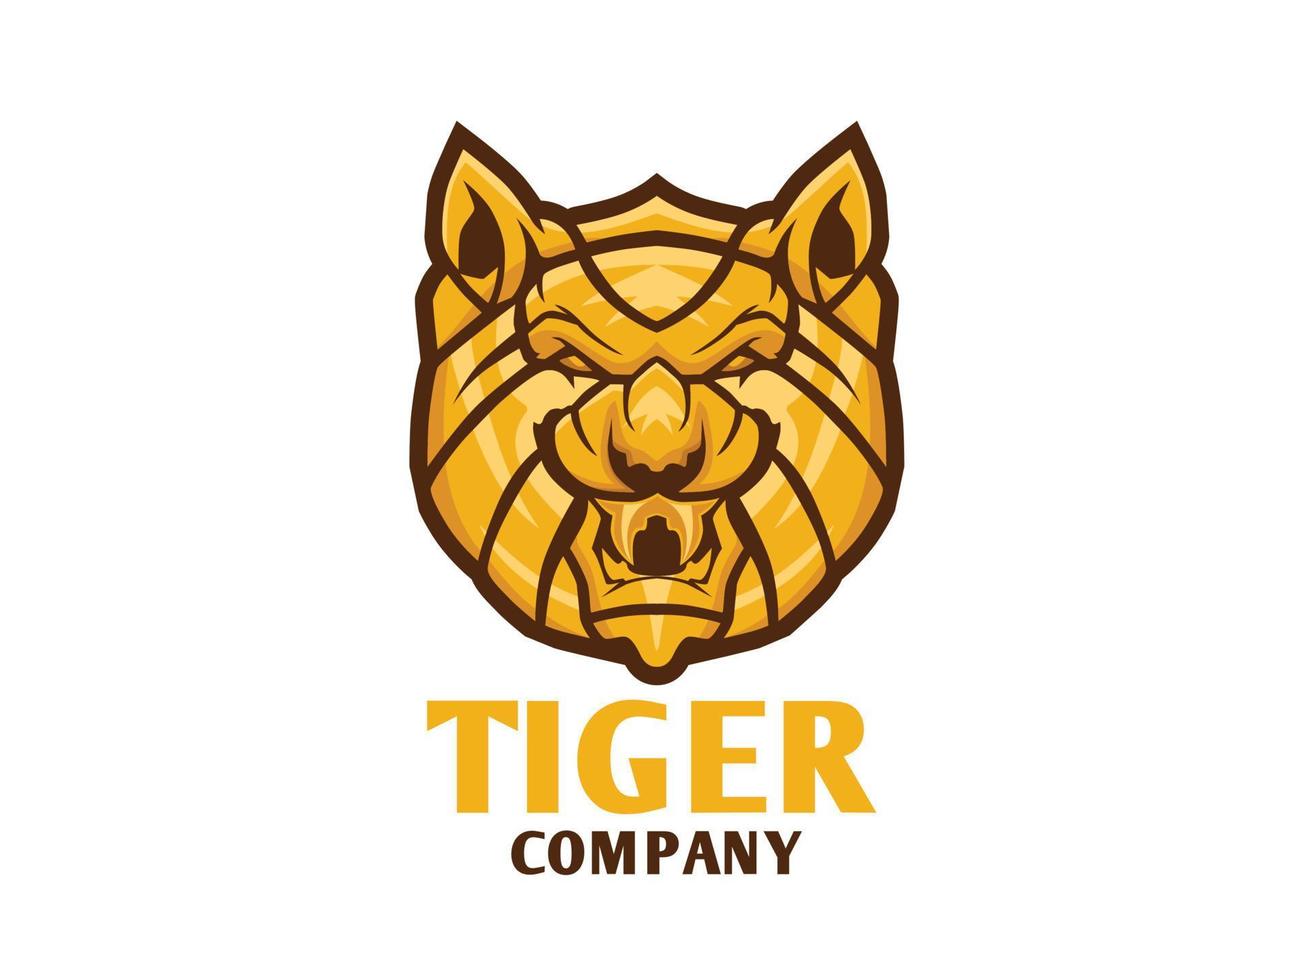 logotipo da cabeça do tigre vetor